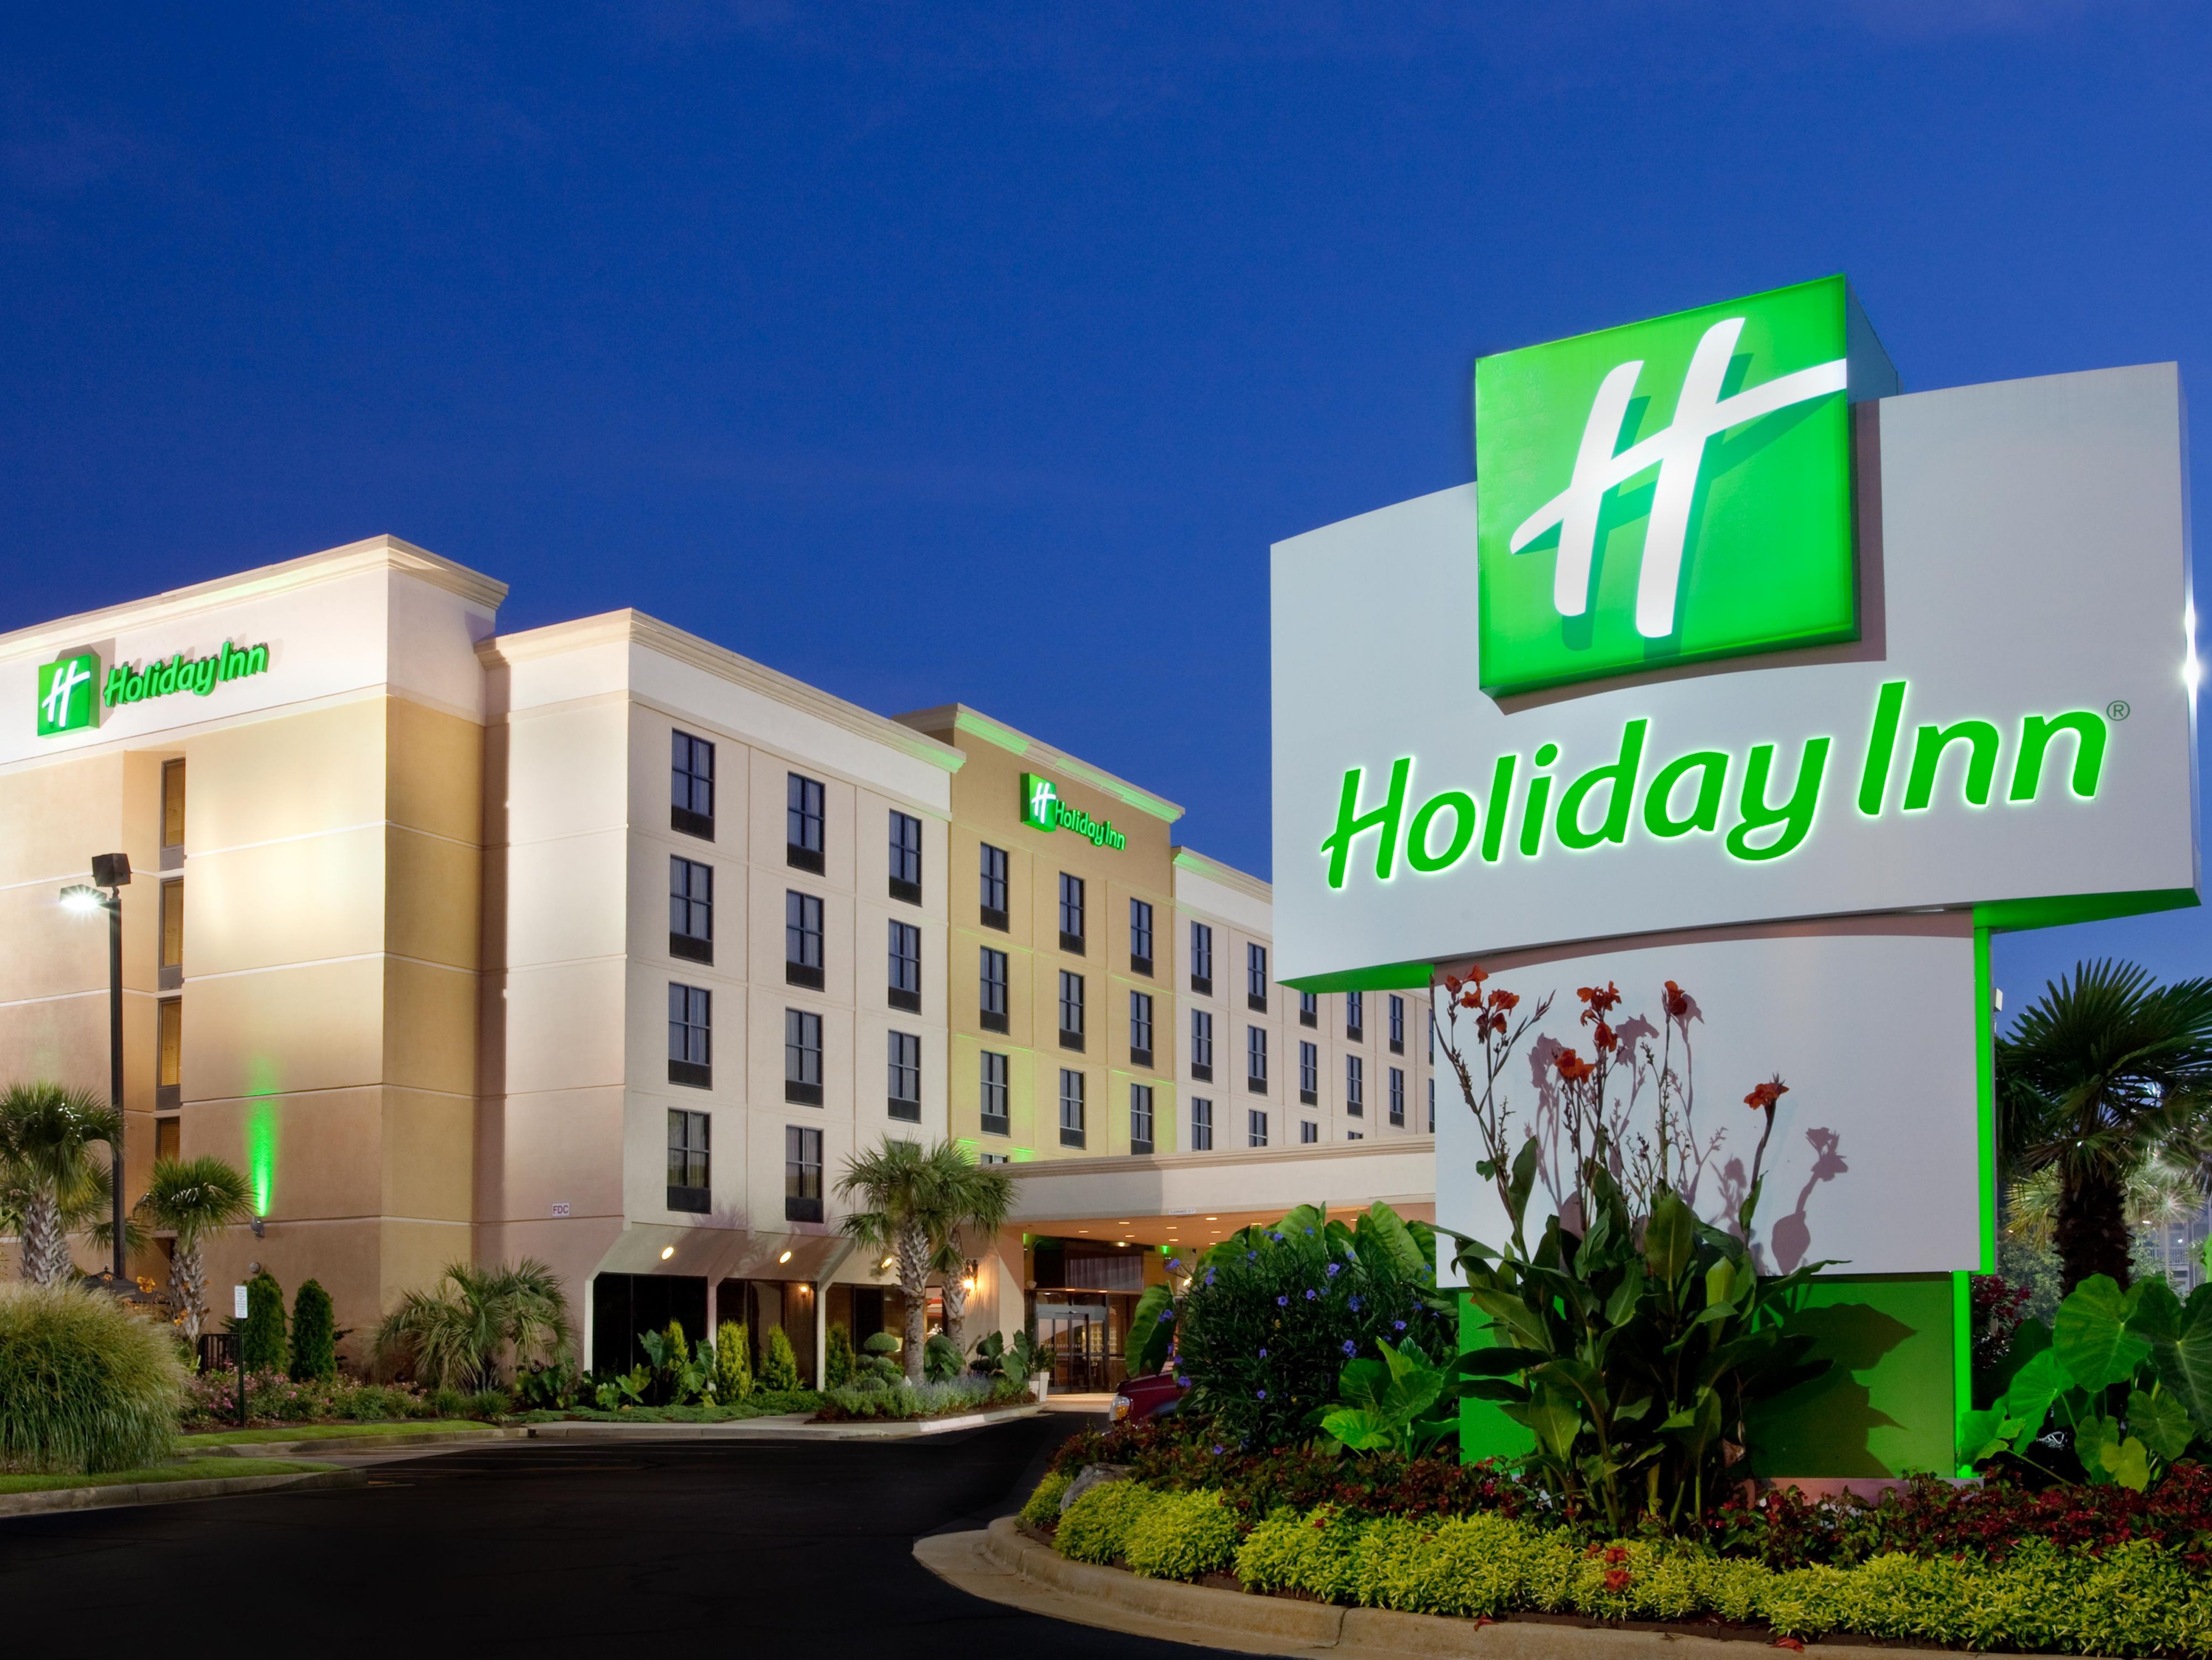 Hotel Holiday Inn - Homecare24